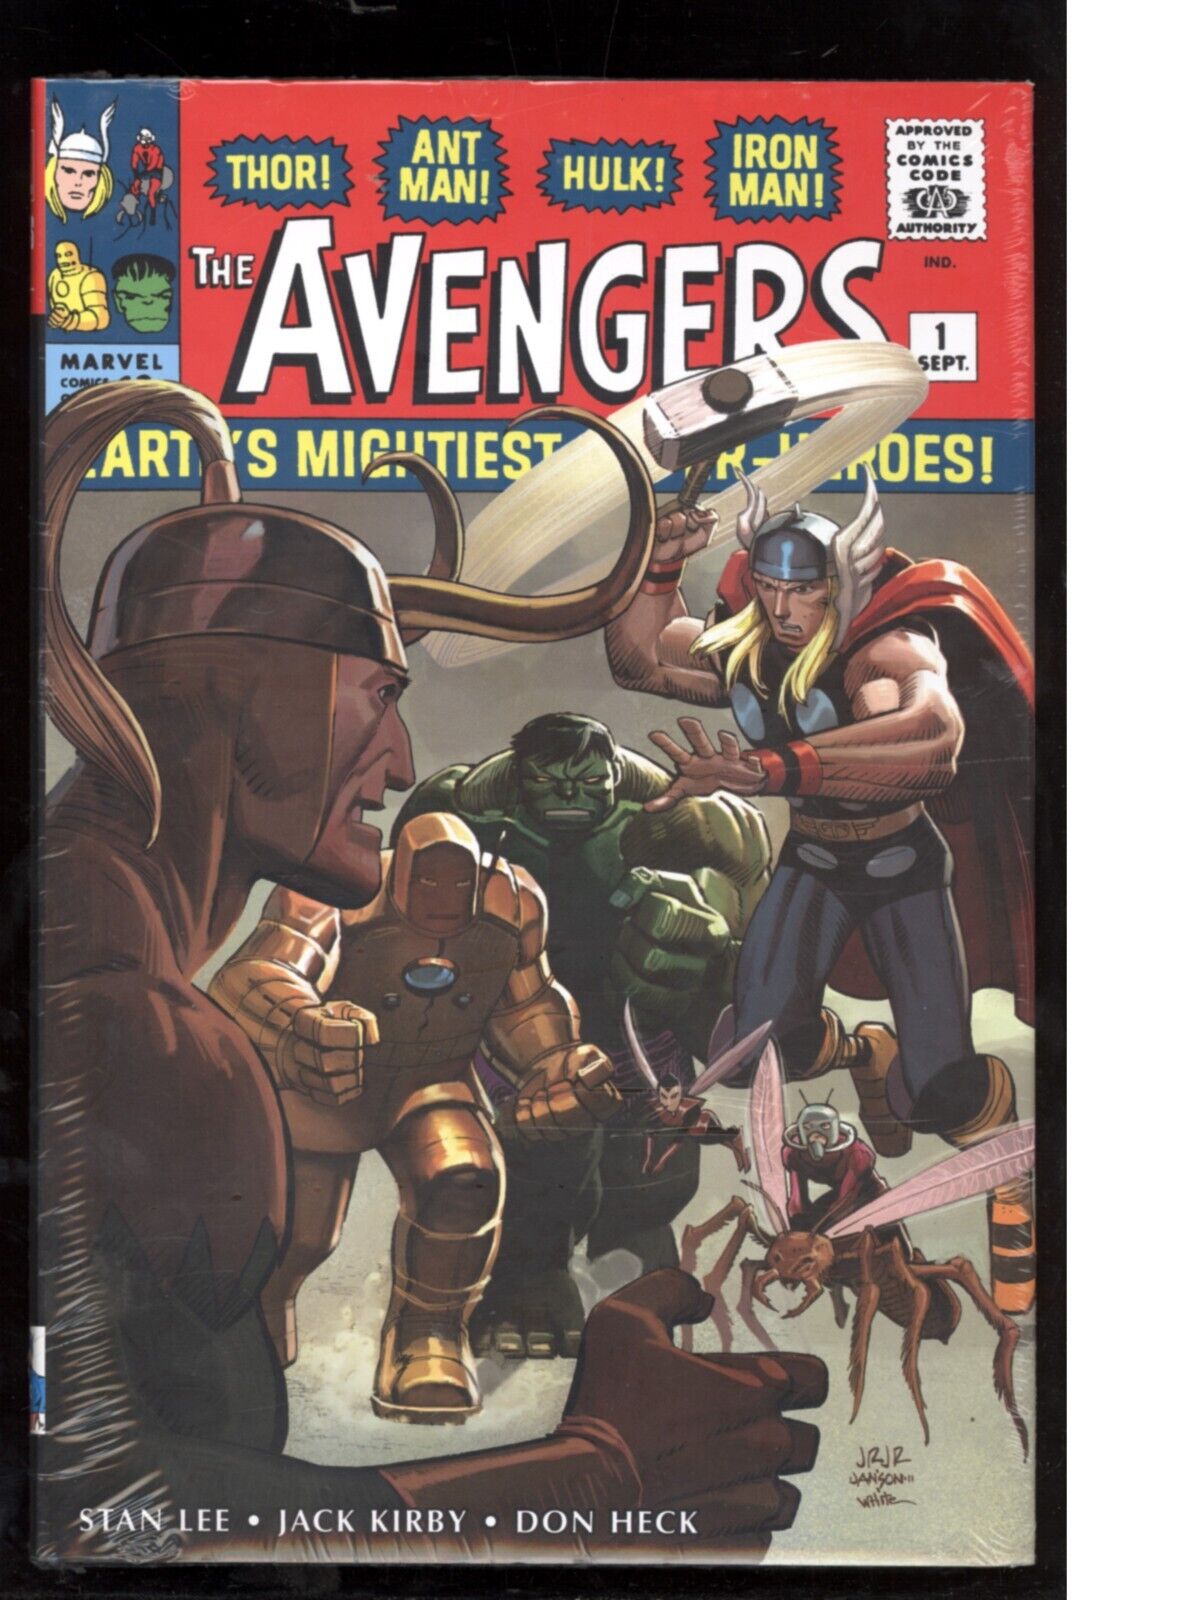 Avengers Omnibus Vol 1 HC NEW Never Read Sealed